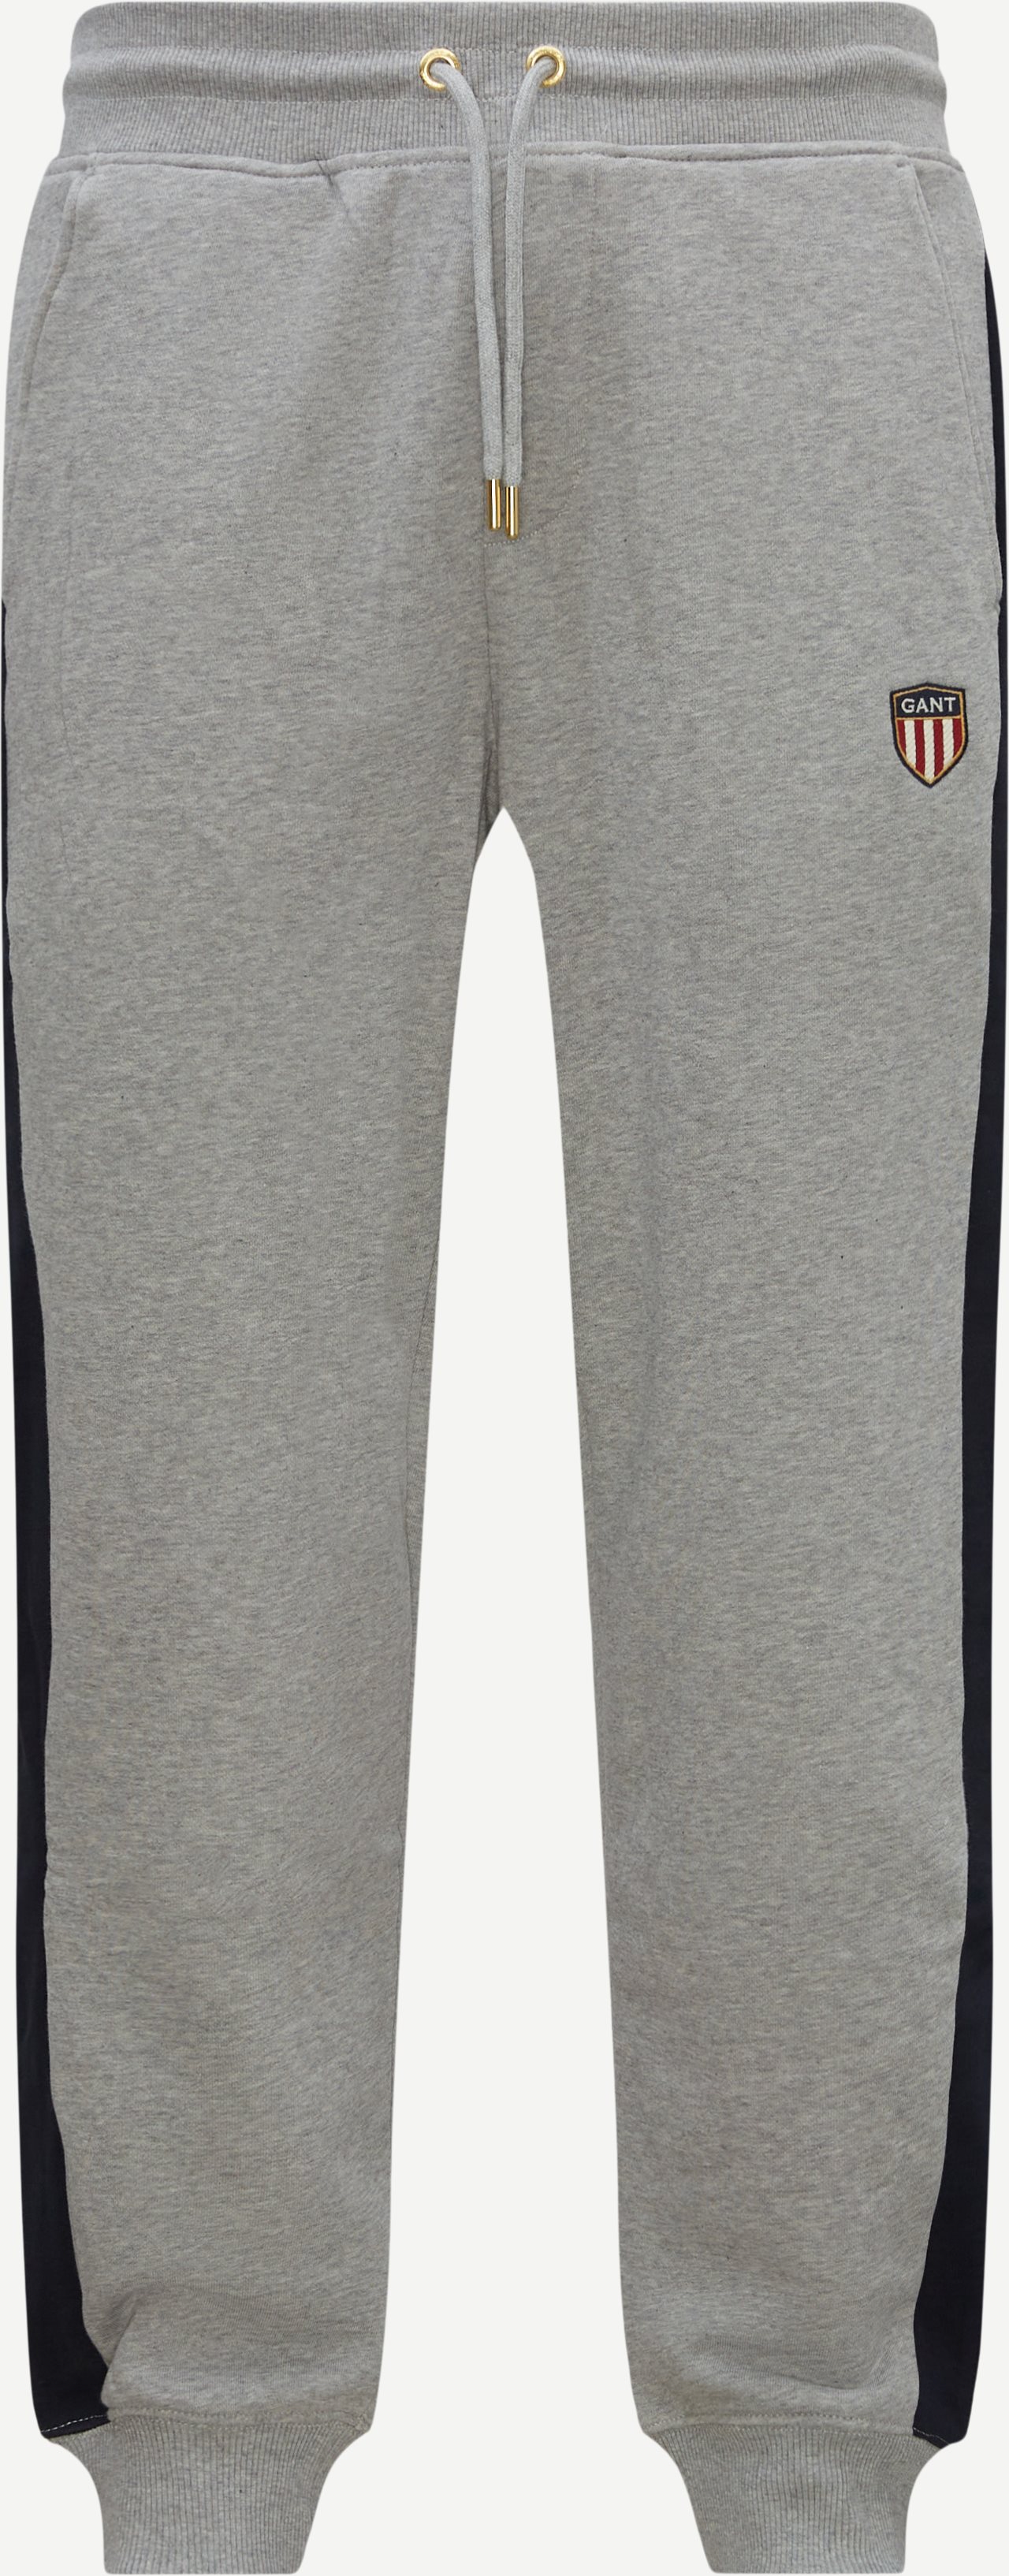 Gant Trousers D1 BANNER SHIELD PANTS 2009014 Grey